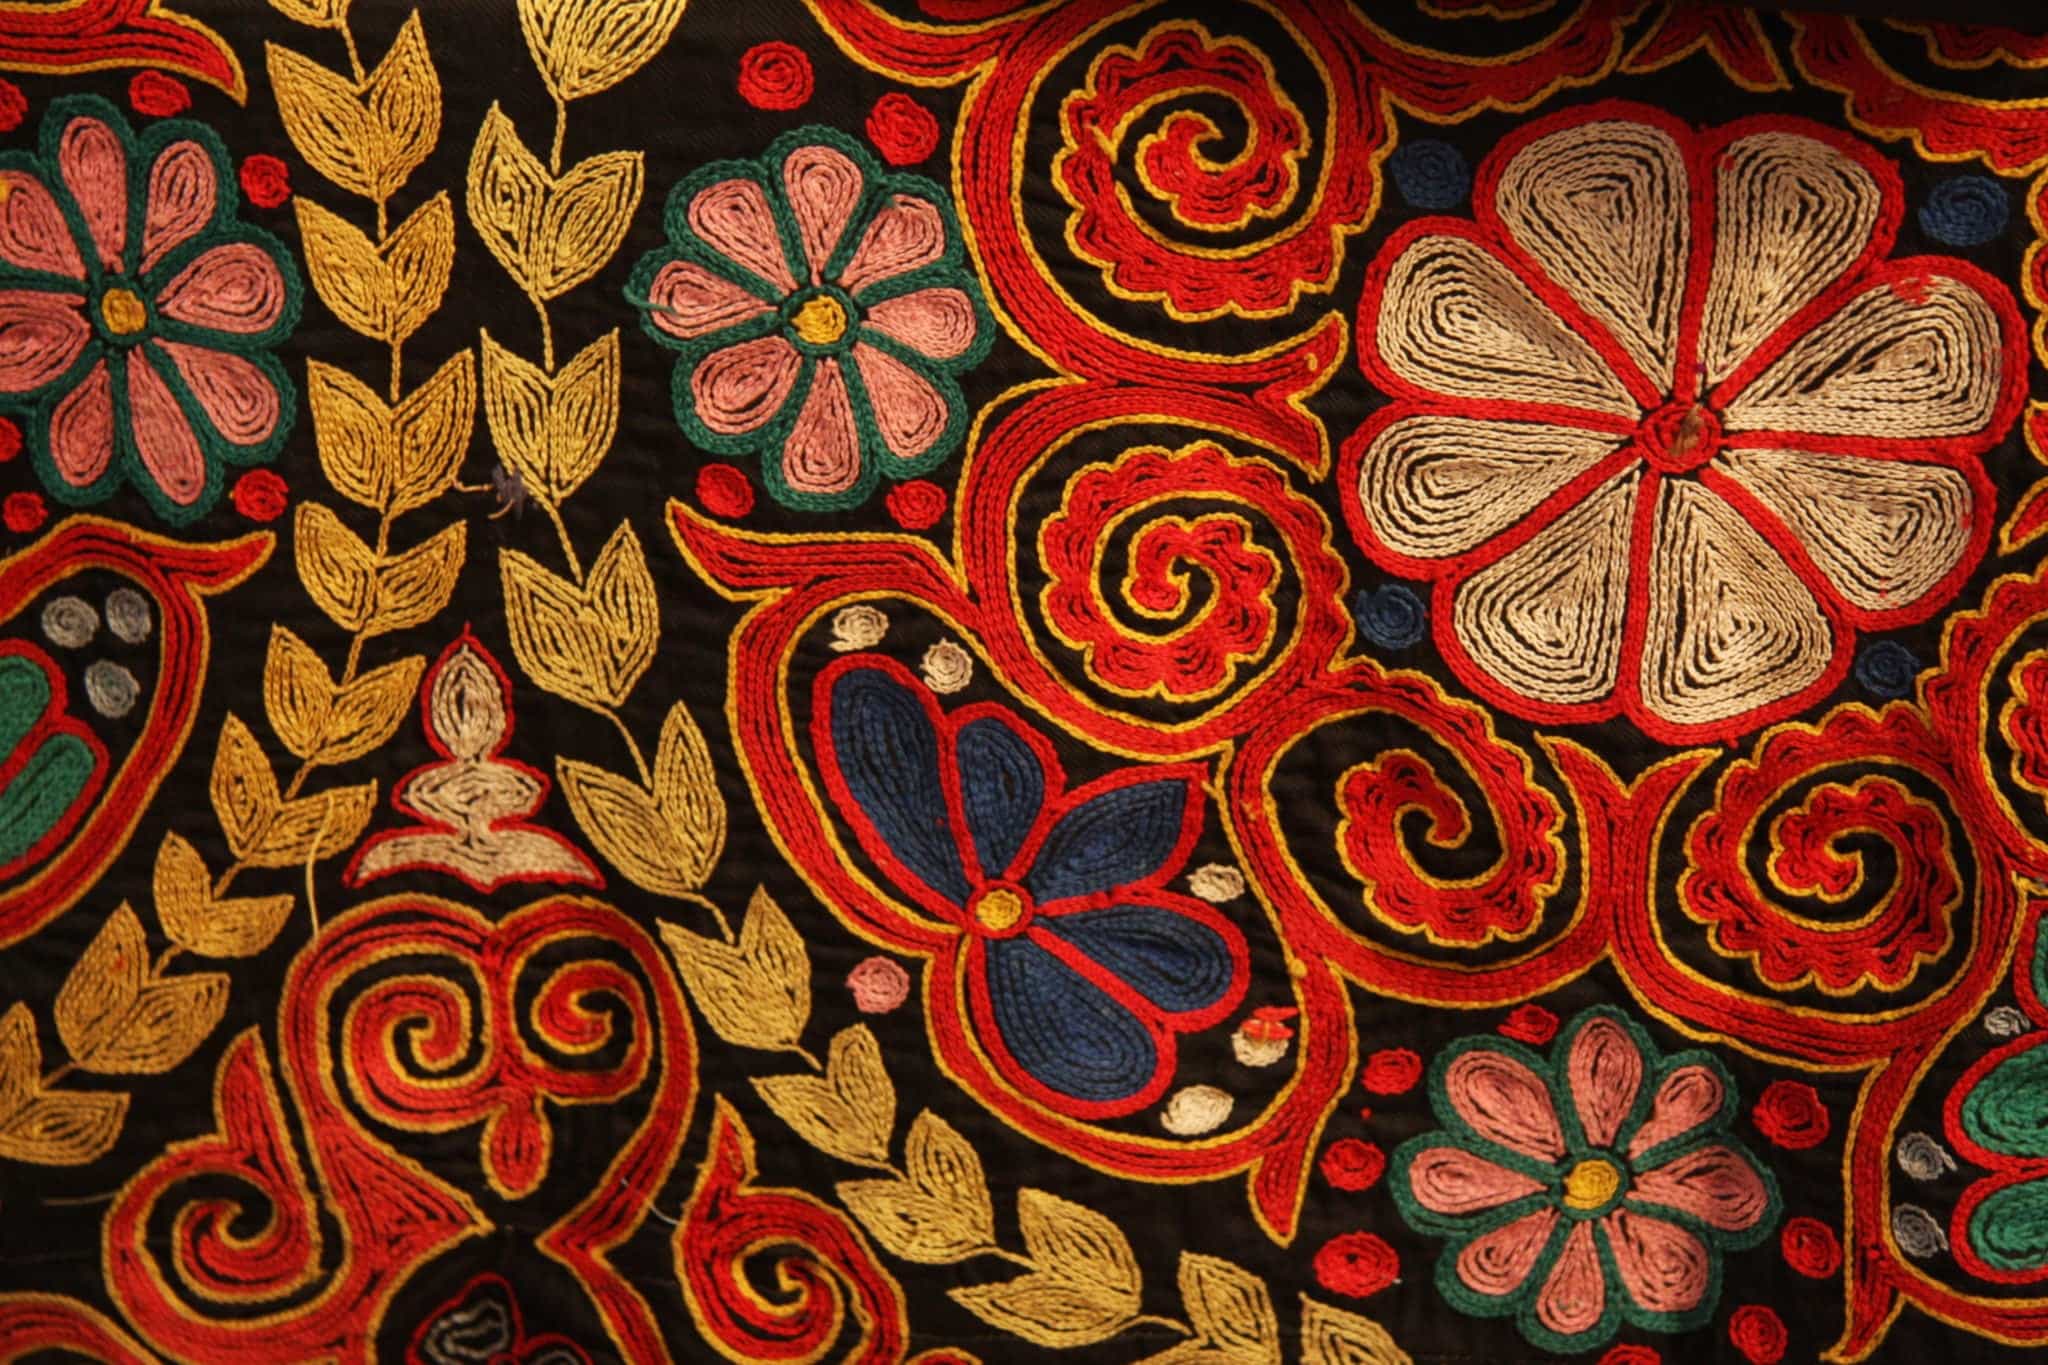 Kazakh rug chain stitch embroidery 2017021817 58a87ed6be918